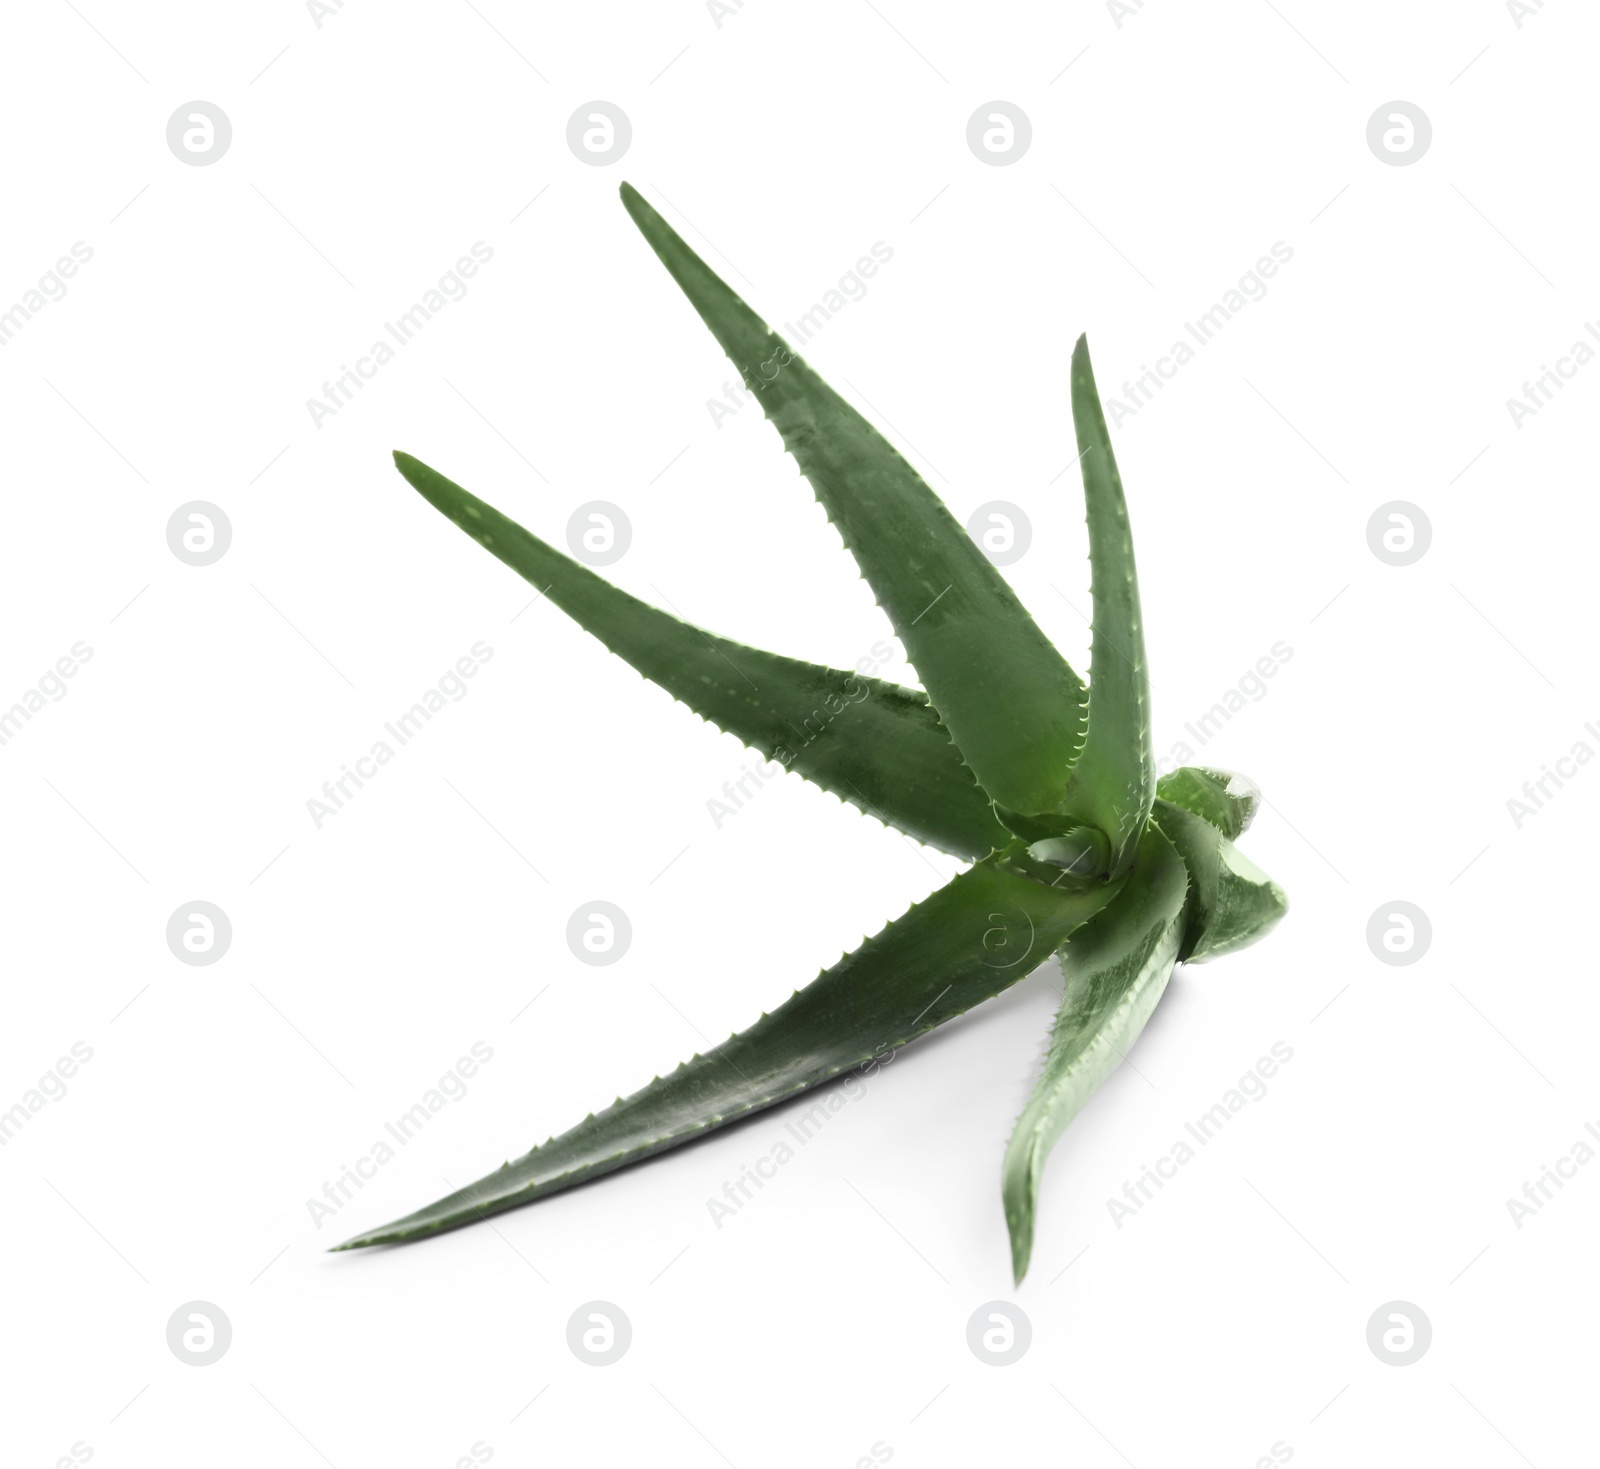 Photo of Green aloe vera plant isolated on white